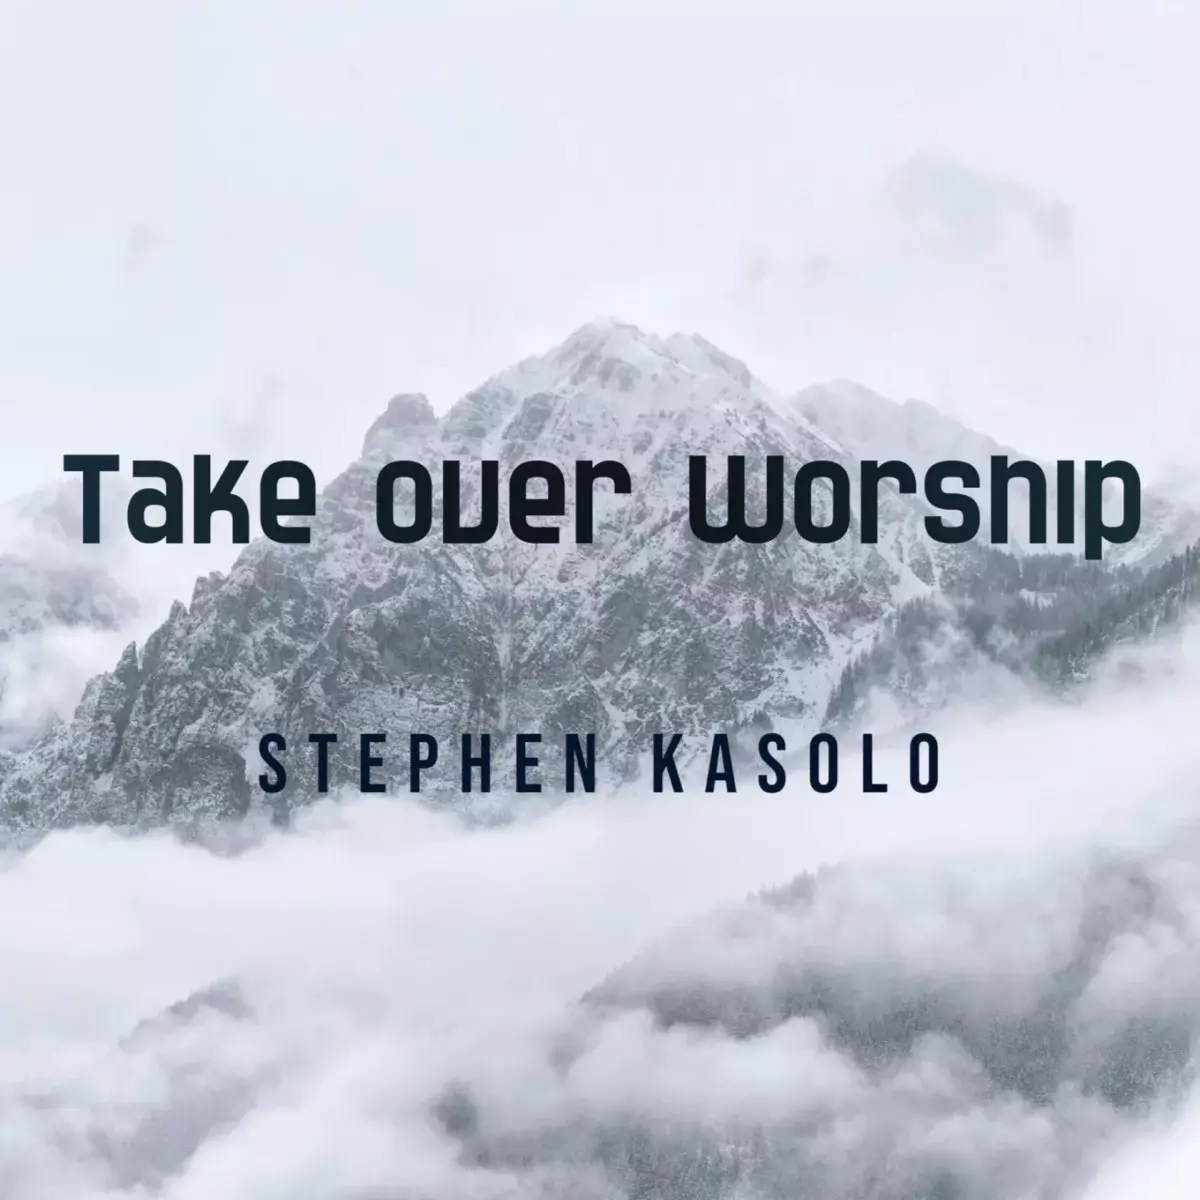 Take over Worship - Single by Stephen Kasolo on Apple Music